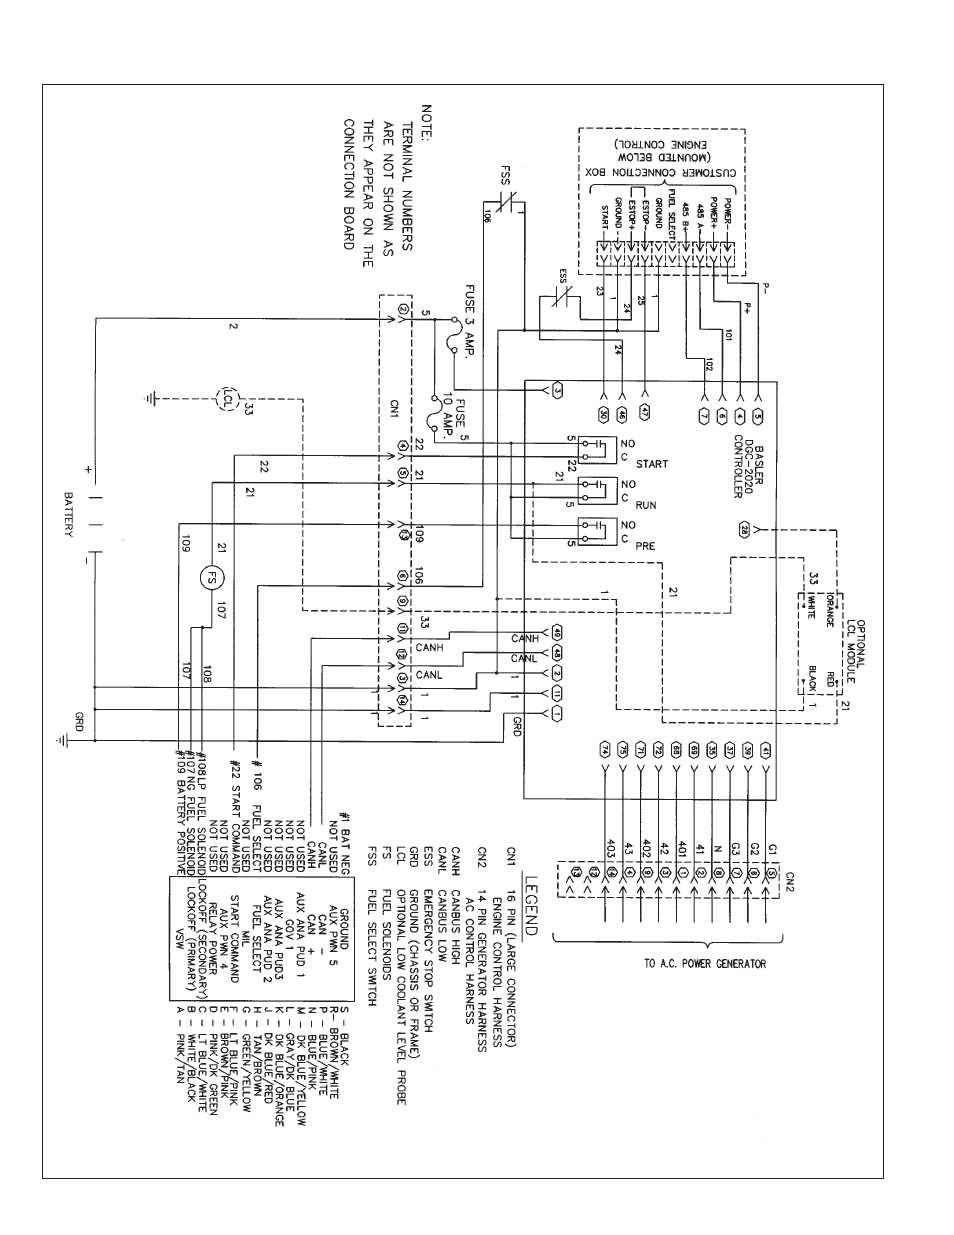 wiring diagram for winpower generator